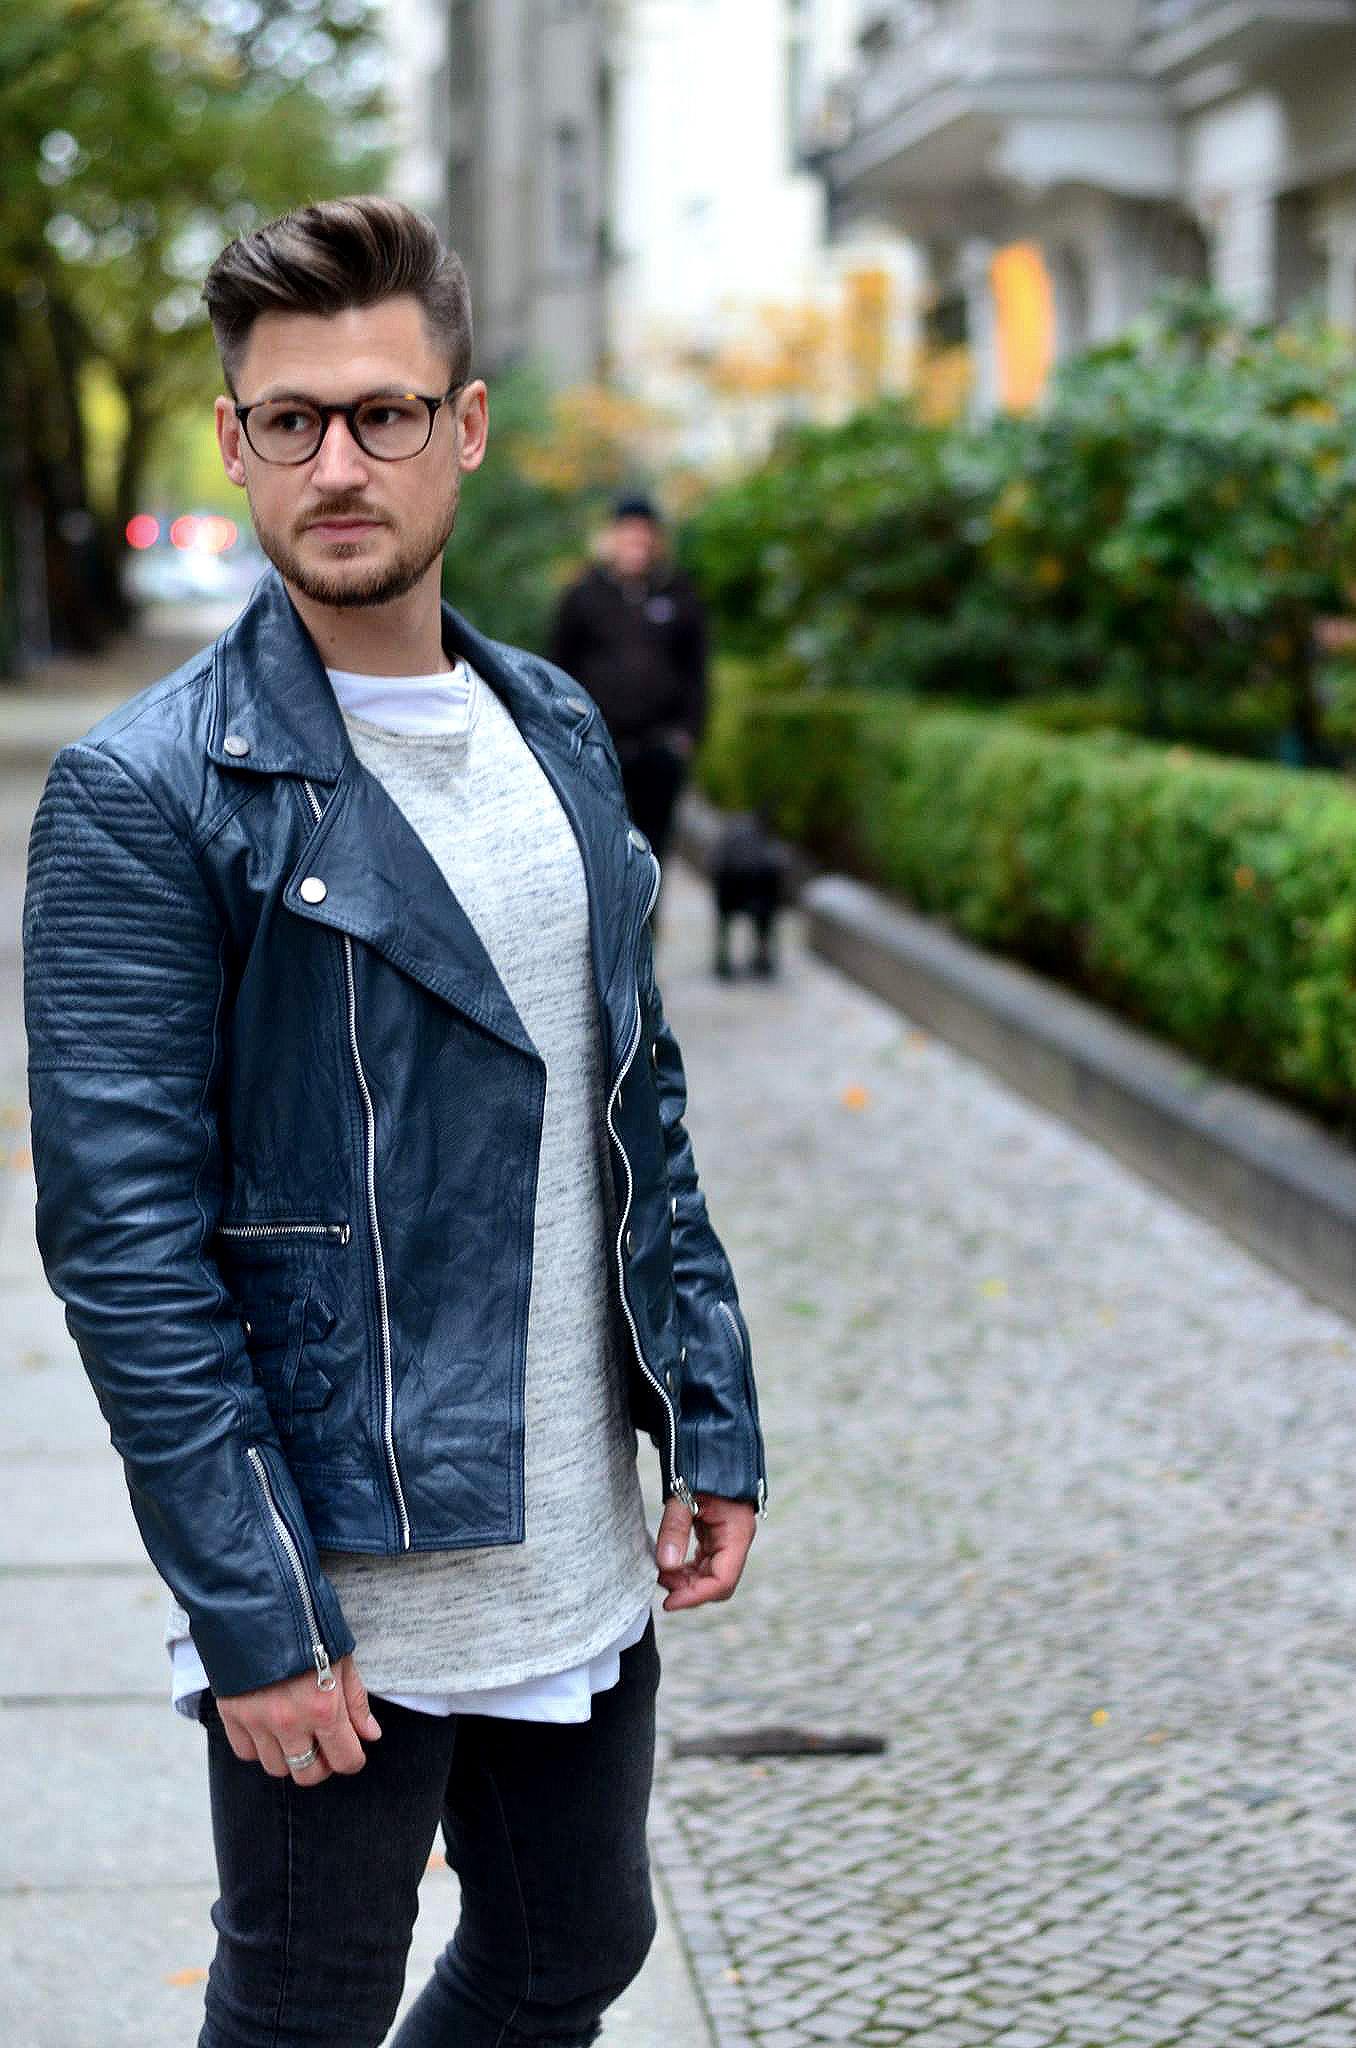 Styleblog-Männerblog-Berlin-Lederjacke-chelseaboots-streetwear-männermode